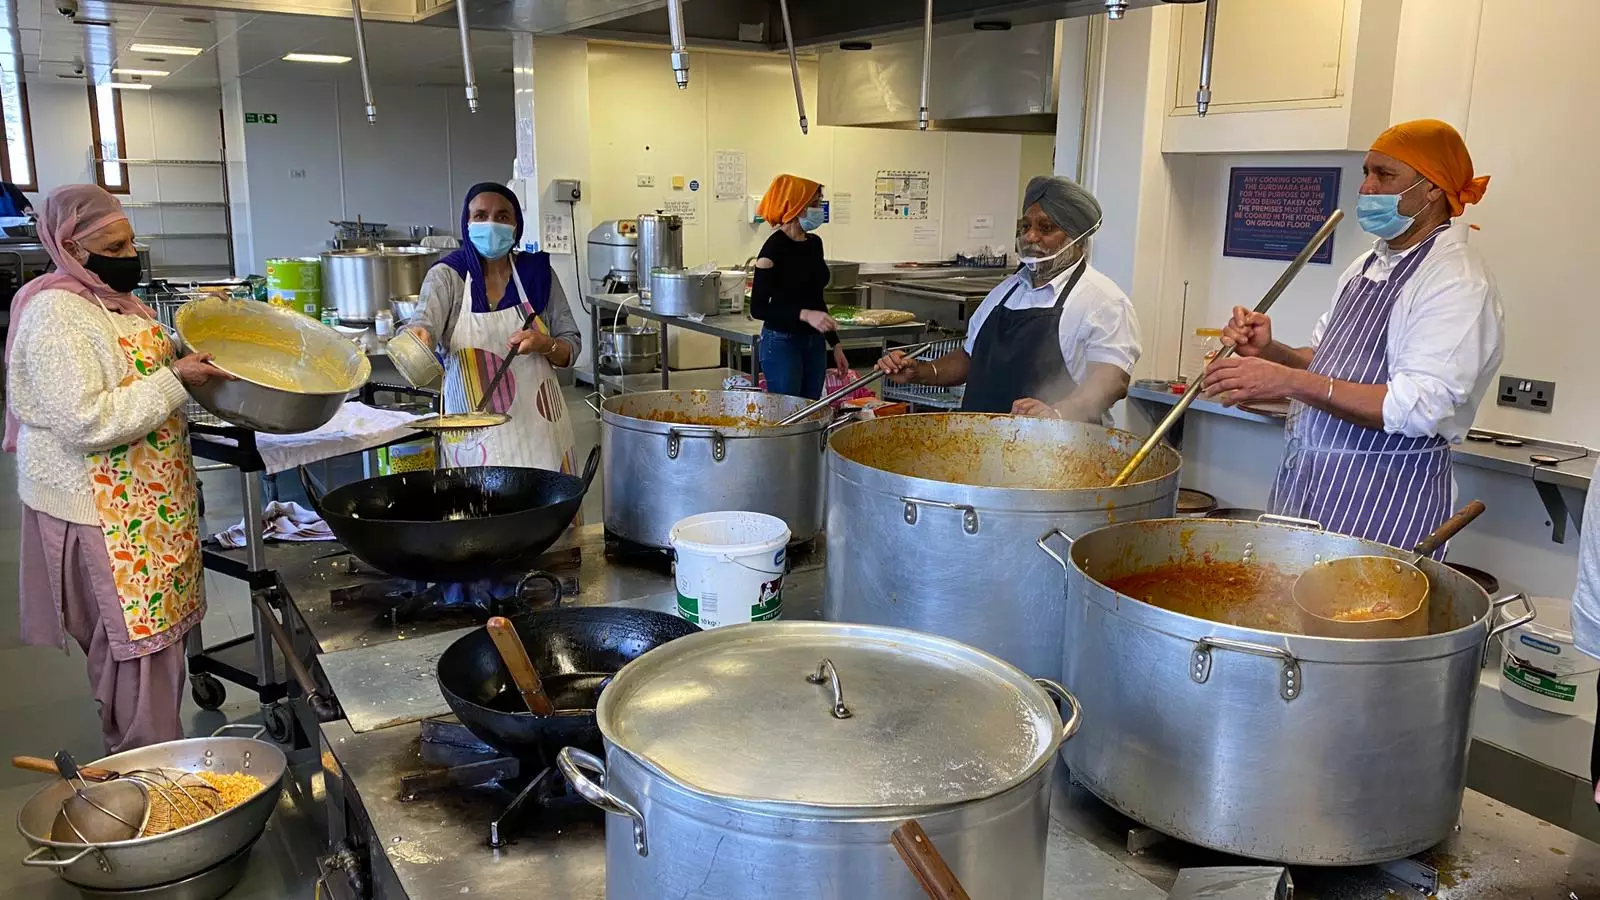 People at Guru Nanak Darbar Gurdwara in Gravesend have been working to prepare food for stranded lorry drivers.